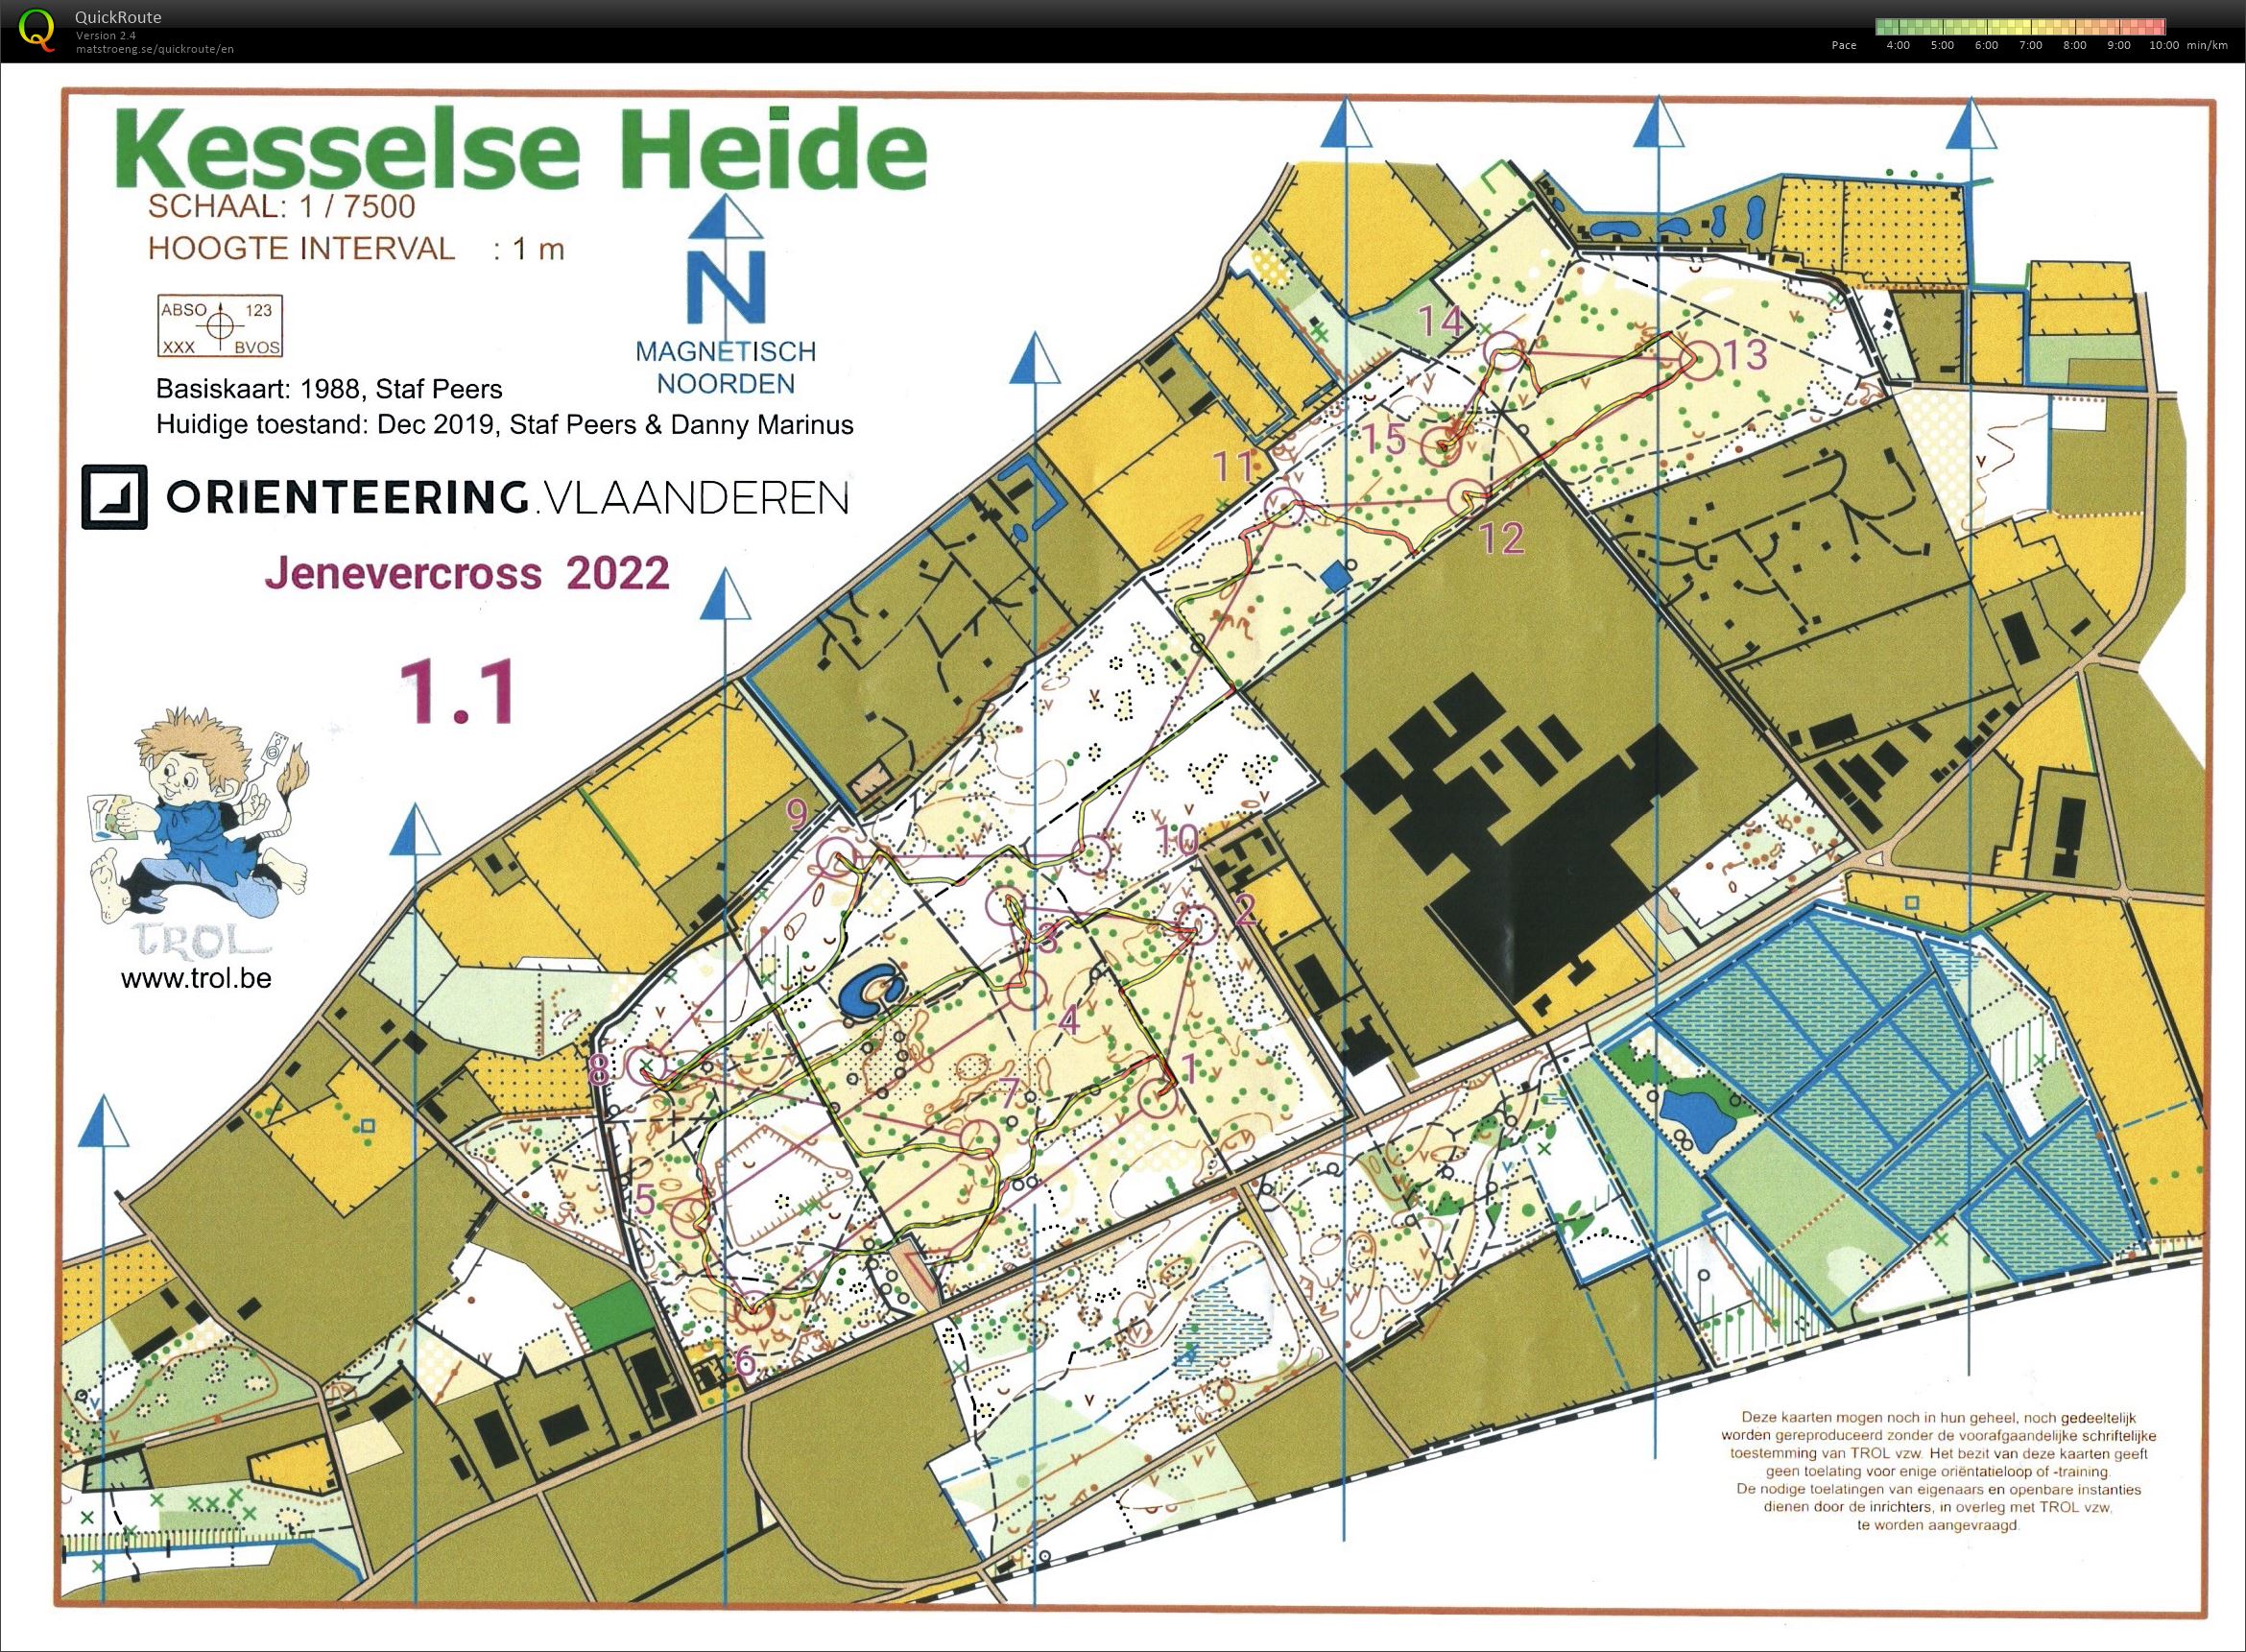 Jenevercross 2022 - Kesselse Heide - 1.1 (07.01.2022)